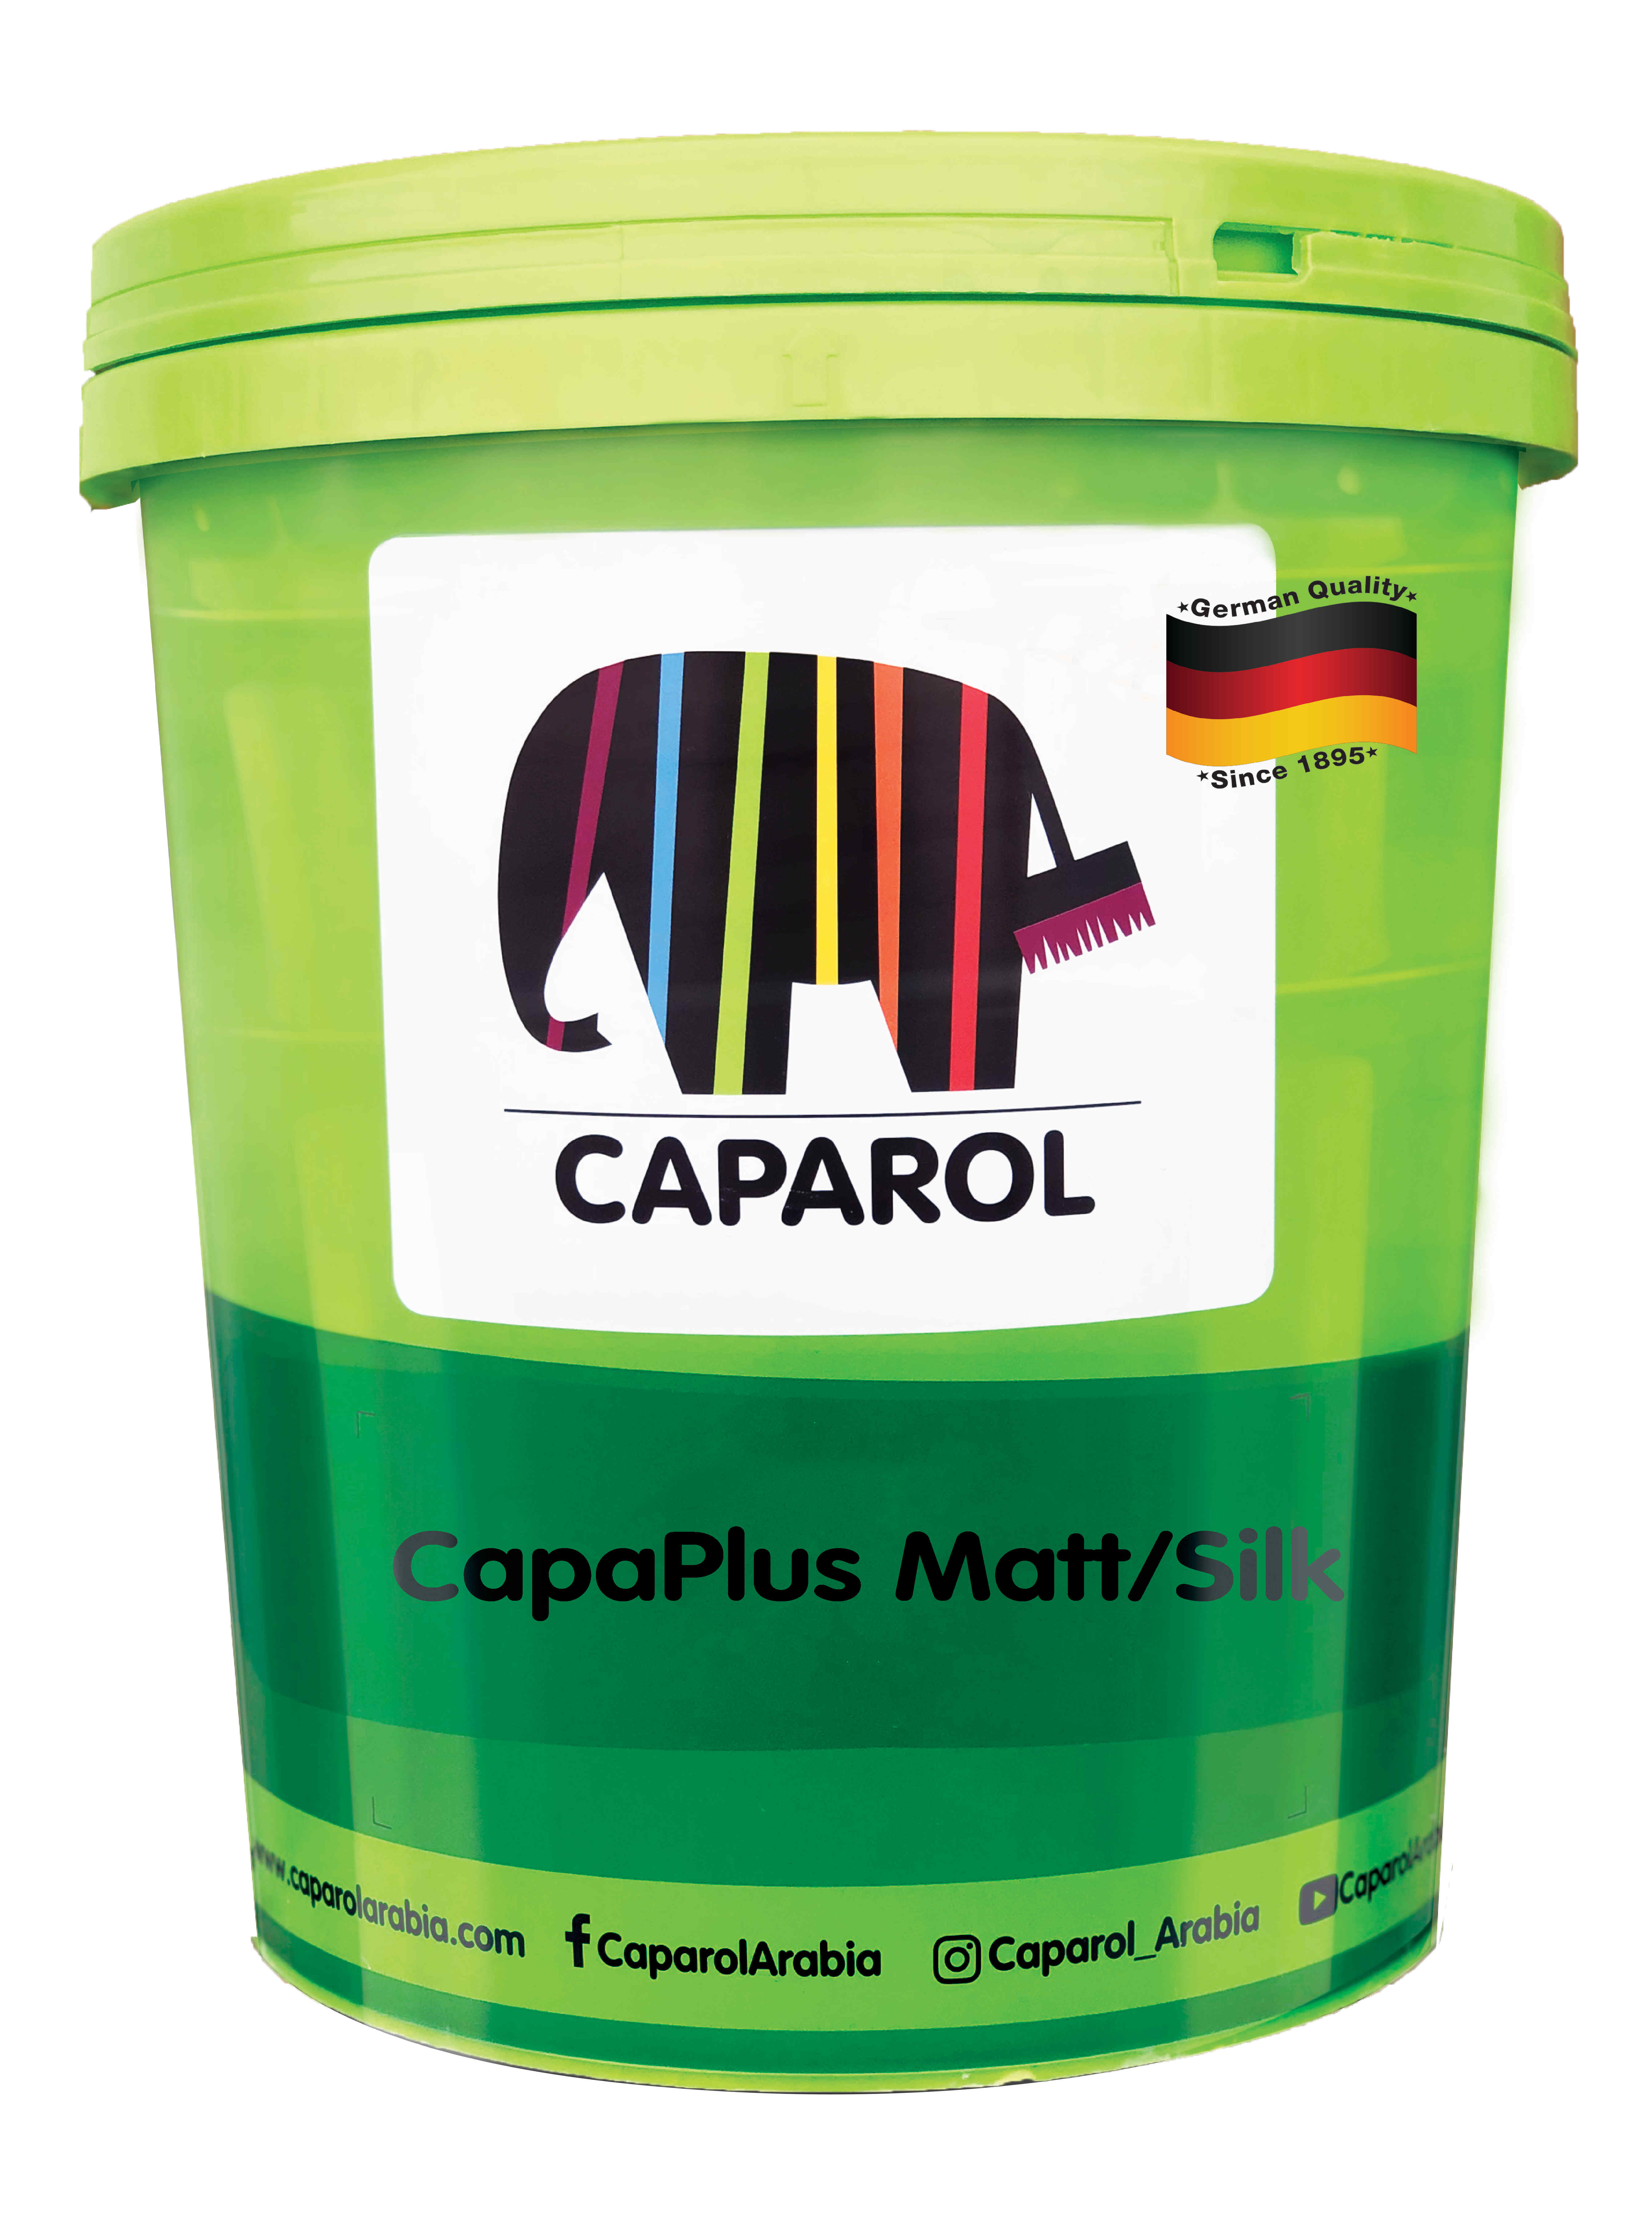 CapaPlus Matt - Superior quality MATT finish for interior; water based washable emulsion paint